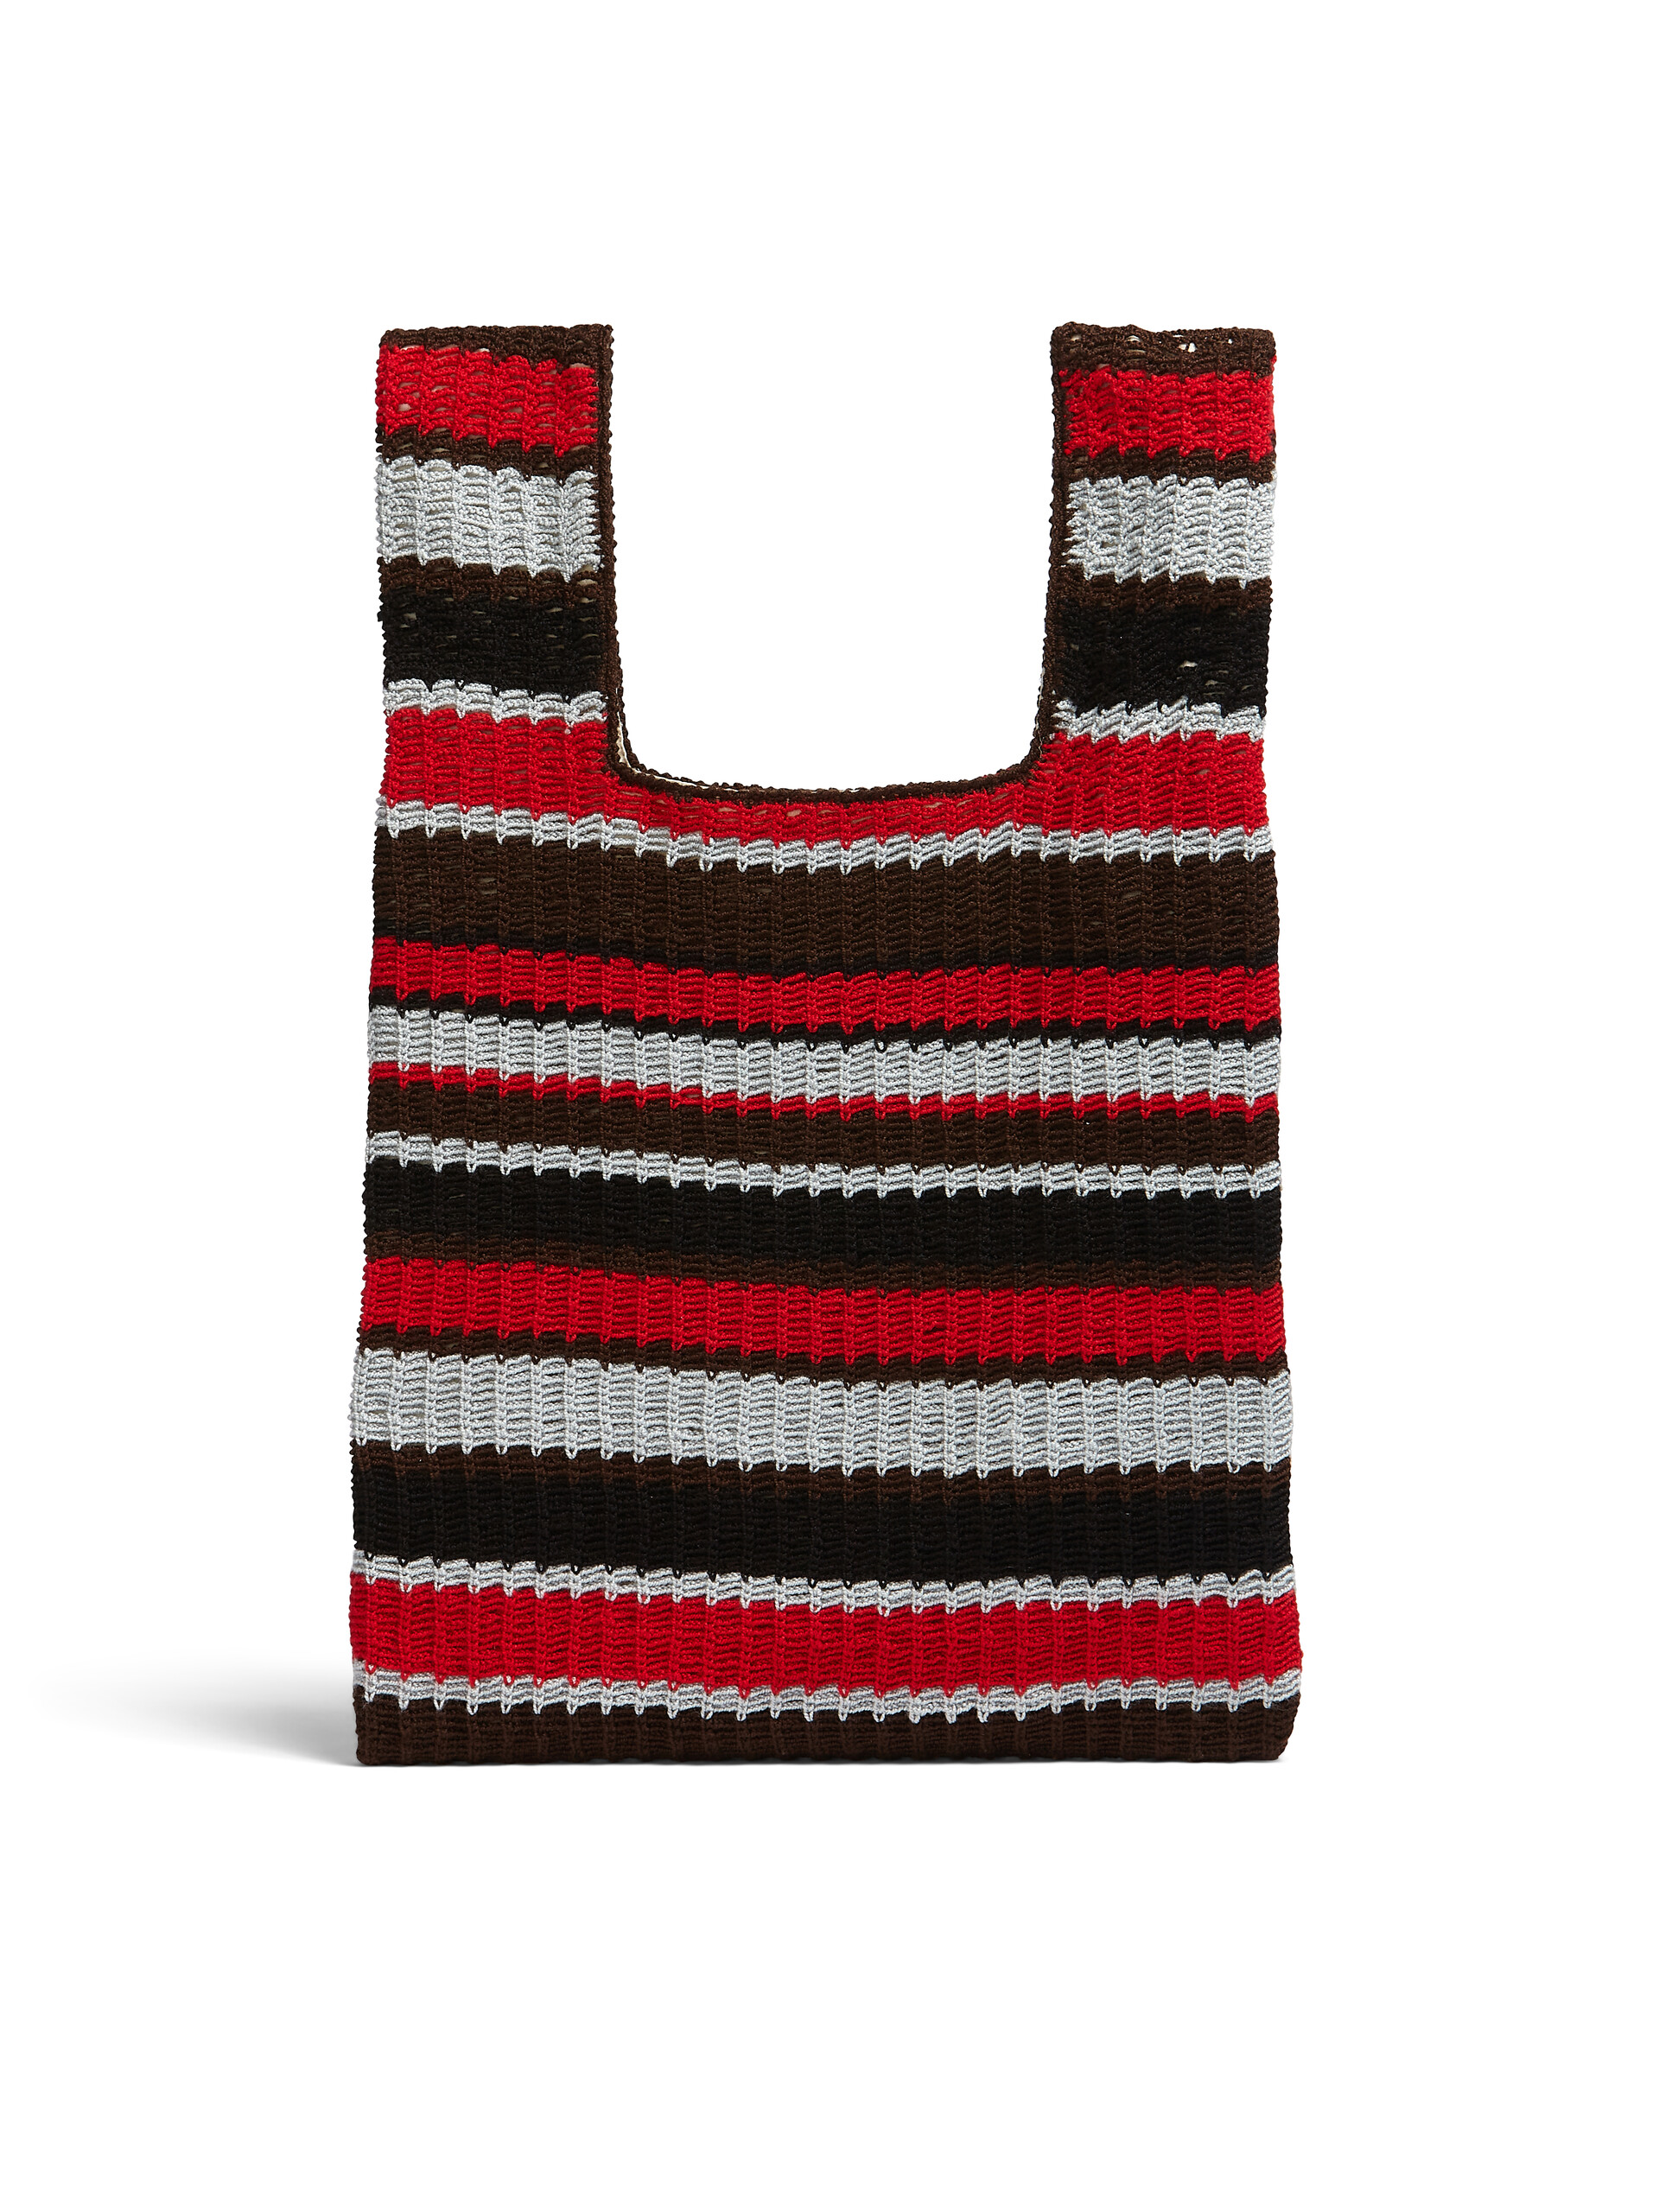 MARNI MARKET FISH bag in multicolor red crochet - Bags - Image 3